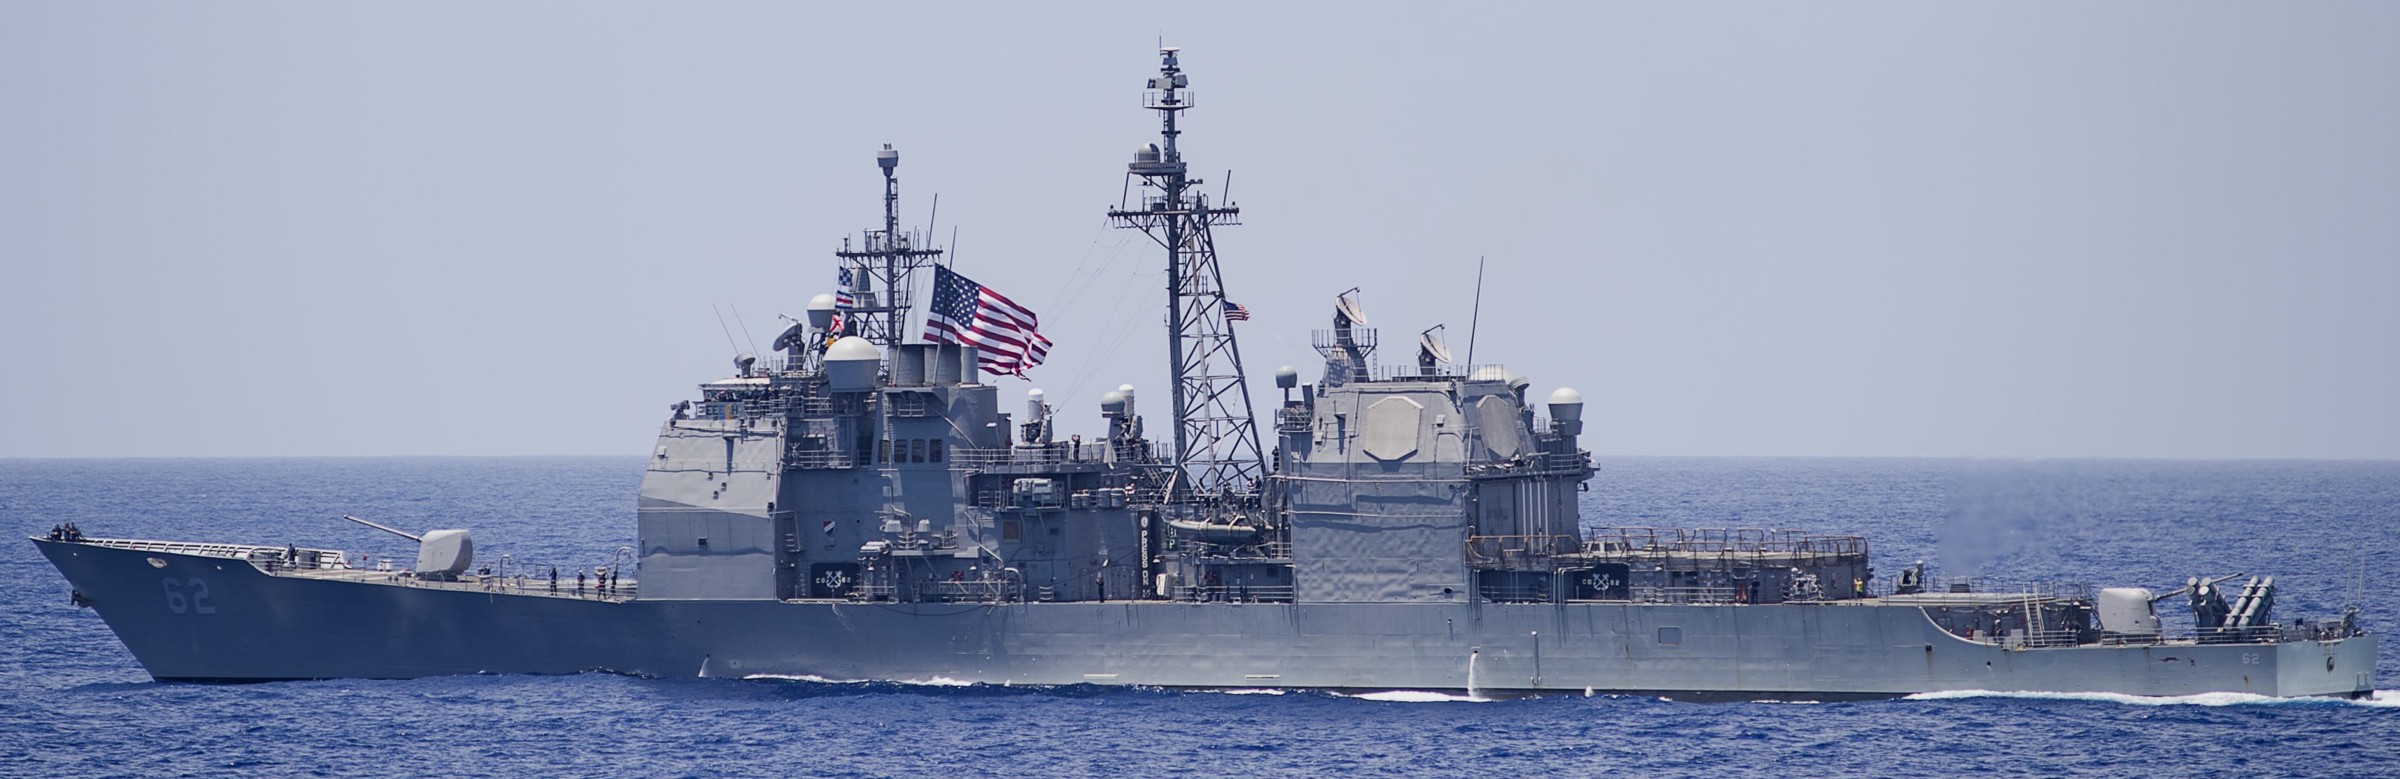 cg-62 uss chancellorsville ticonderoga class guided missile cruiser aegis us navy 79